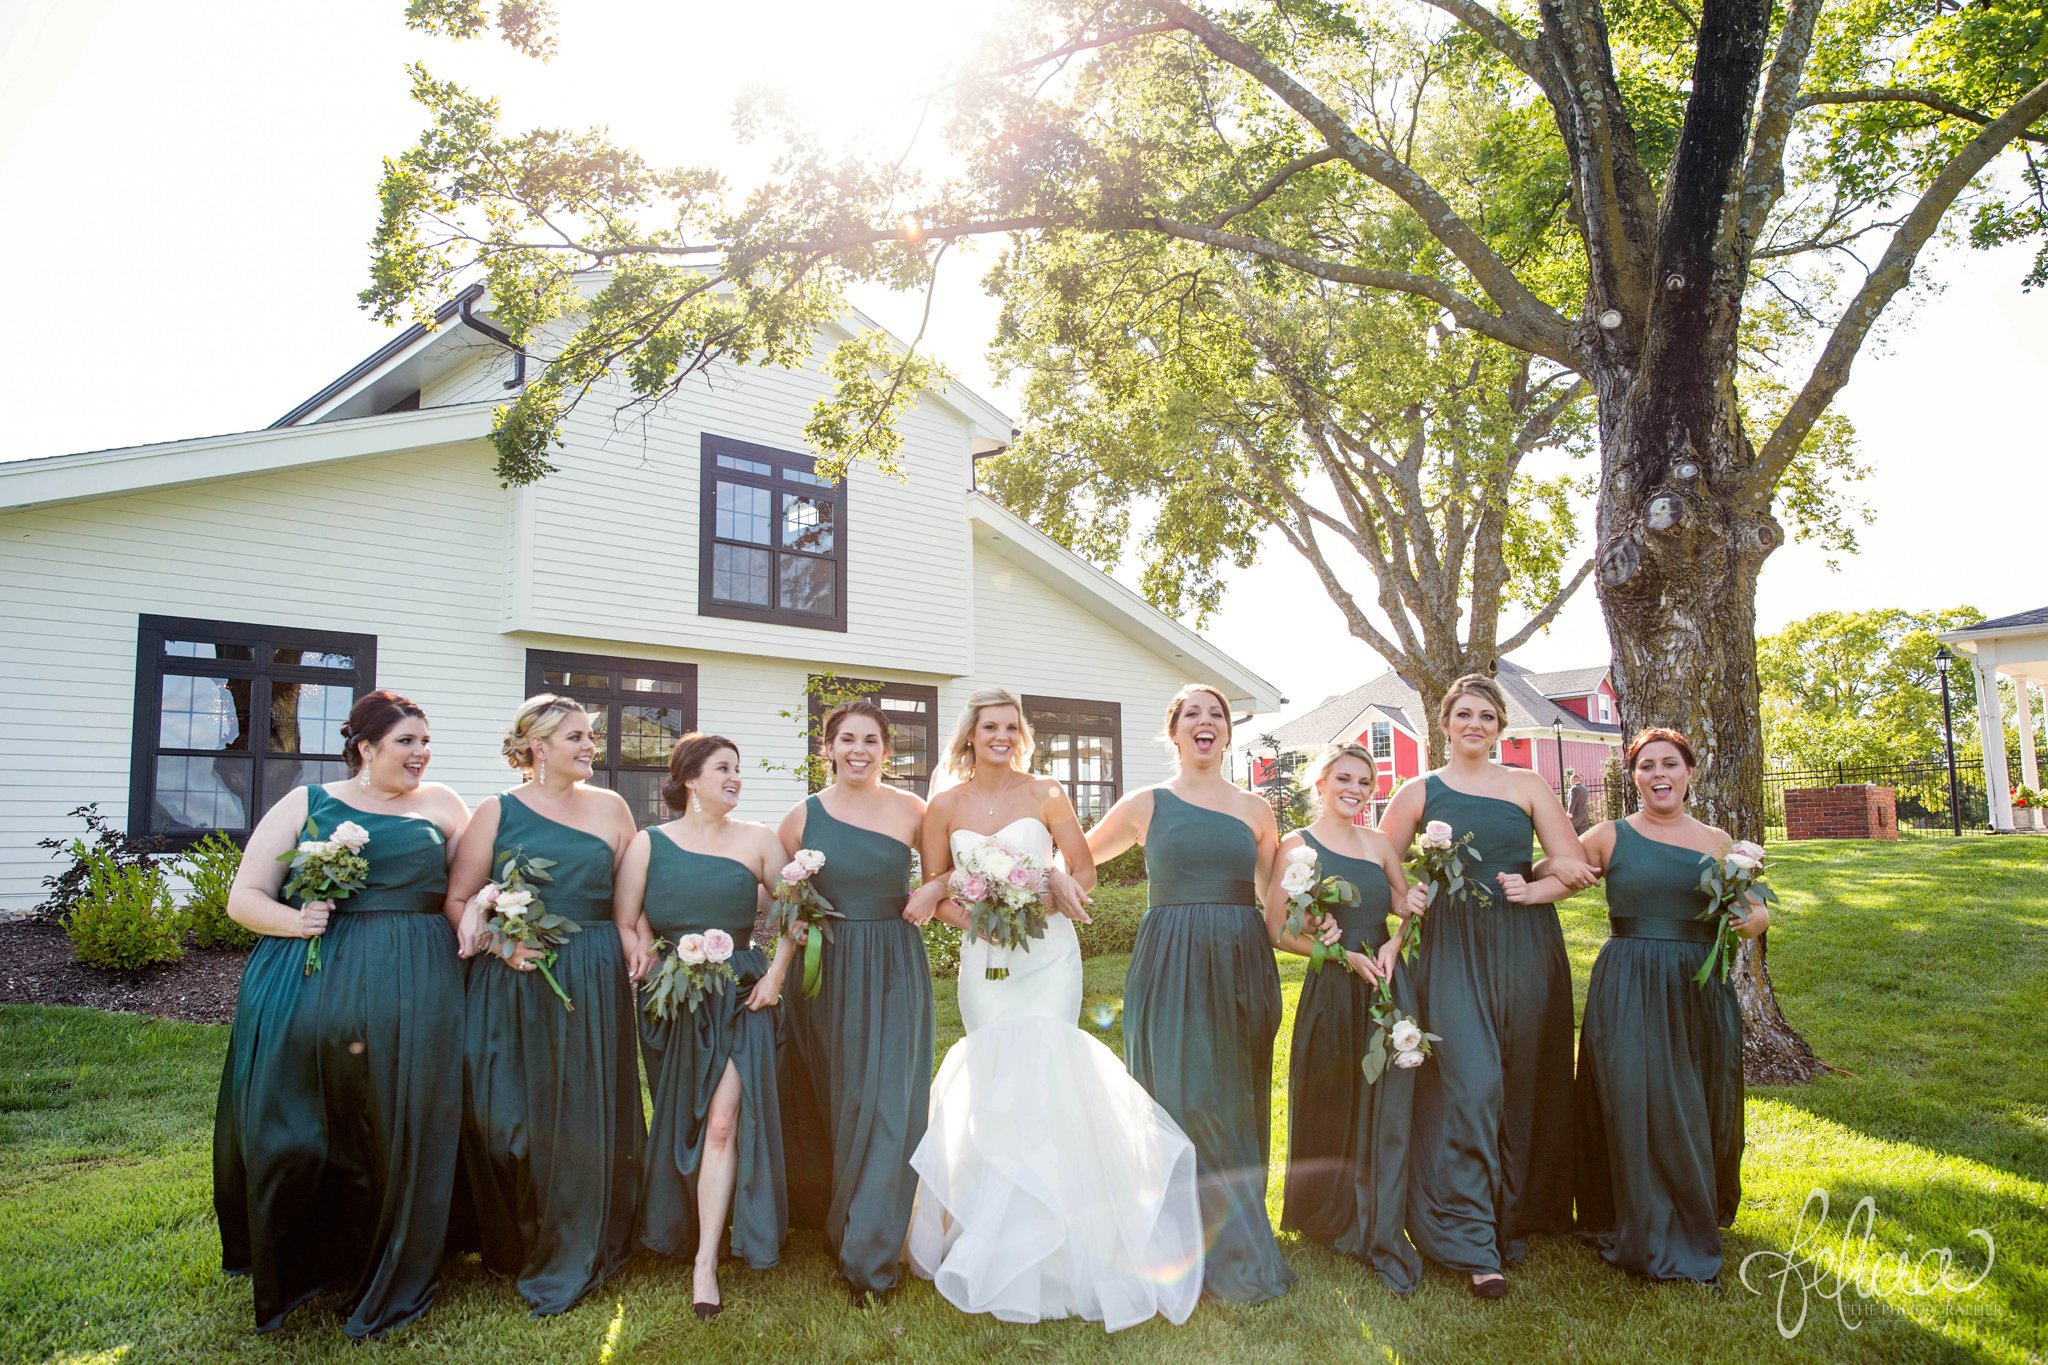 Bridesmaid Candid Photographs | Green | walking | Long Dresses | White Farmhouse | Victorian House | Eighteen Ninety | Kansas City Wedding Venue | Felicia The Photographer